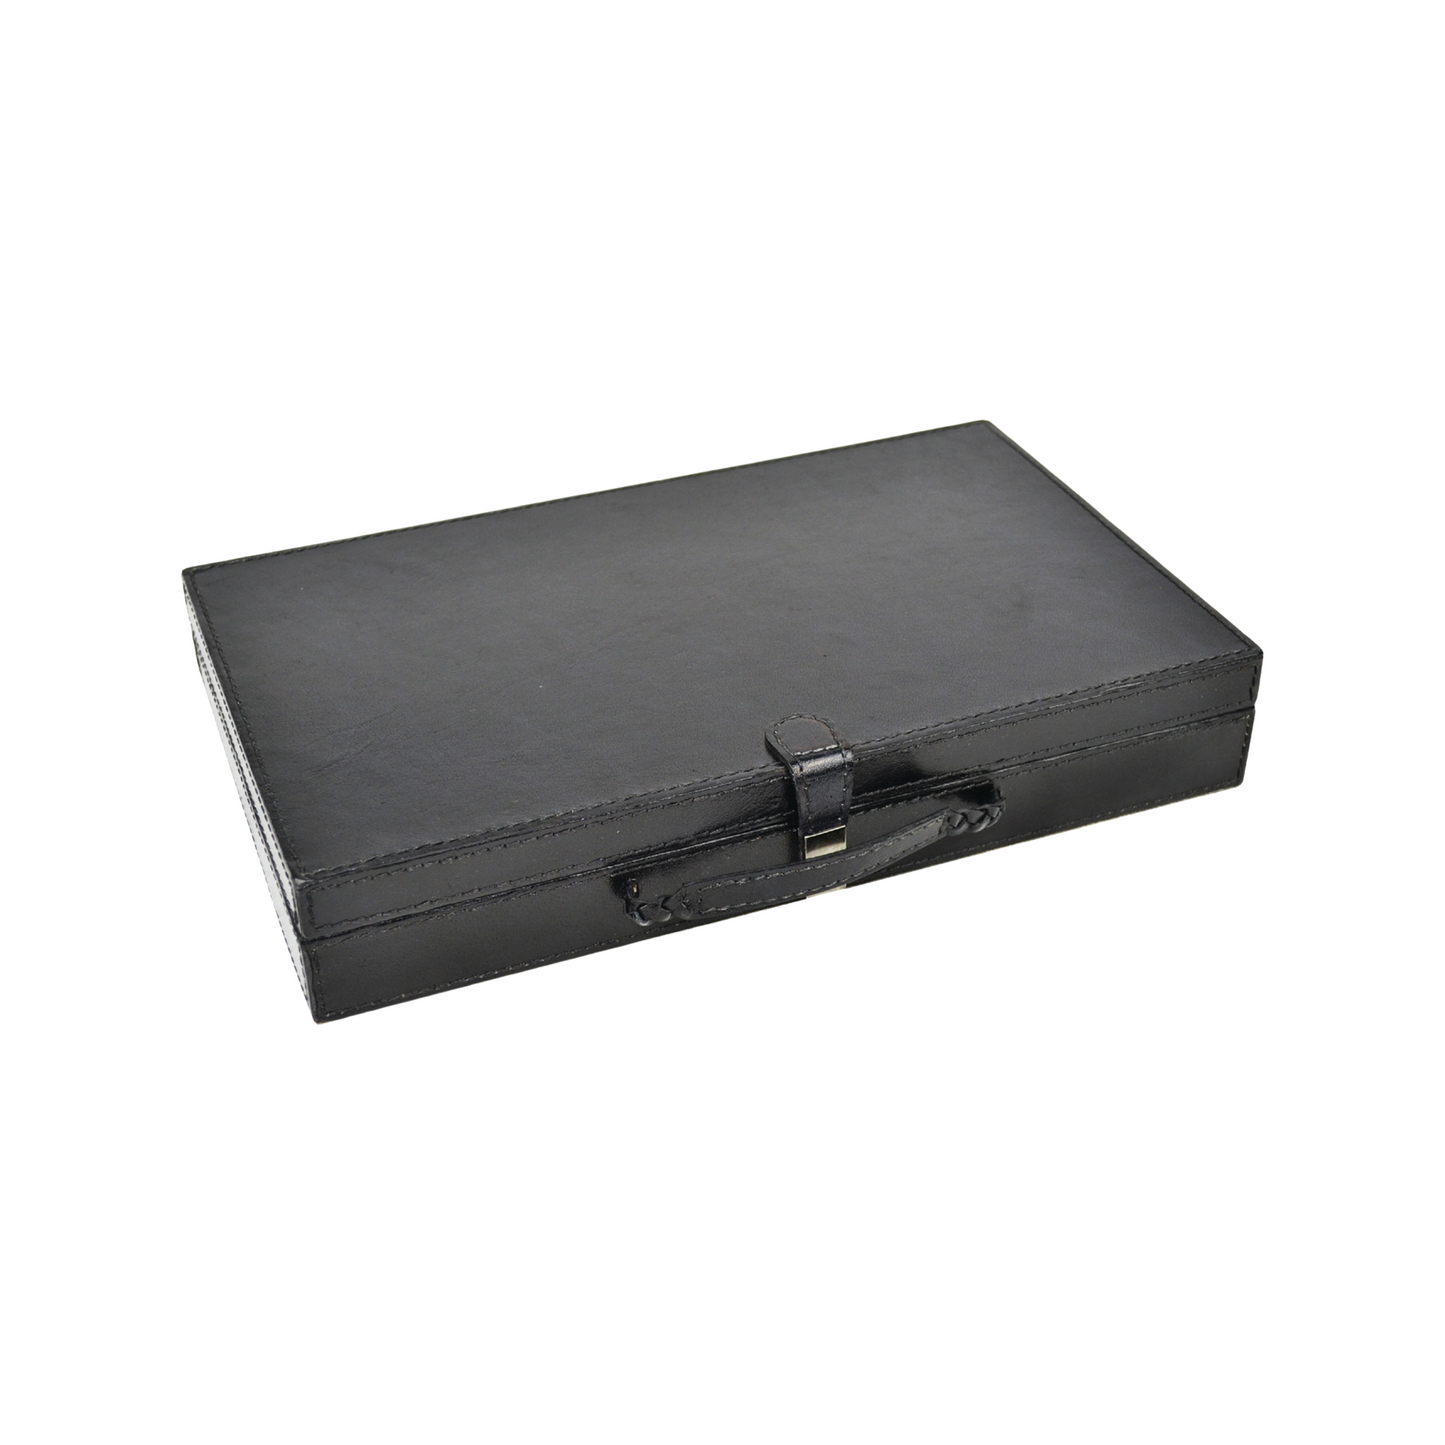 Leather Cufflink Box - Black - DCOR